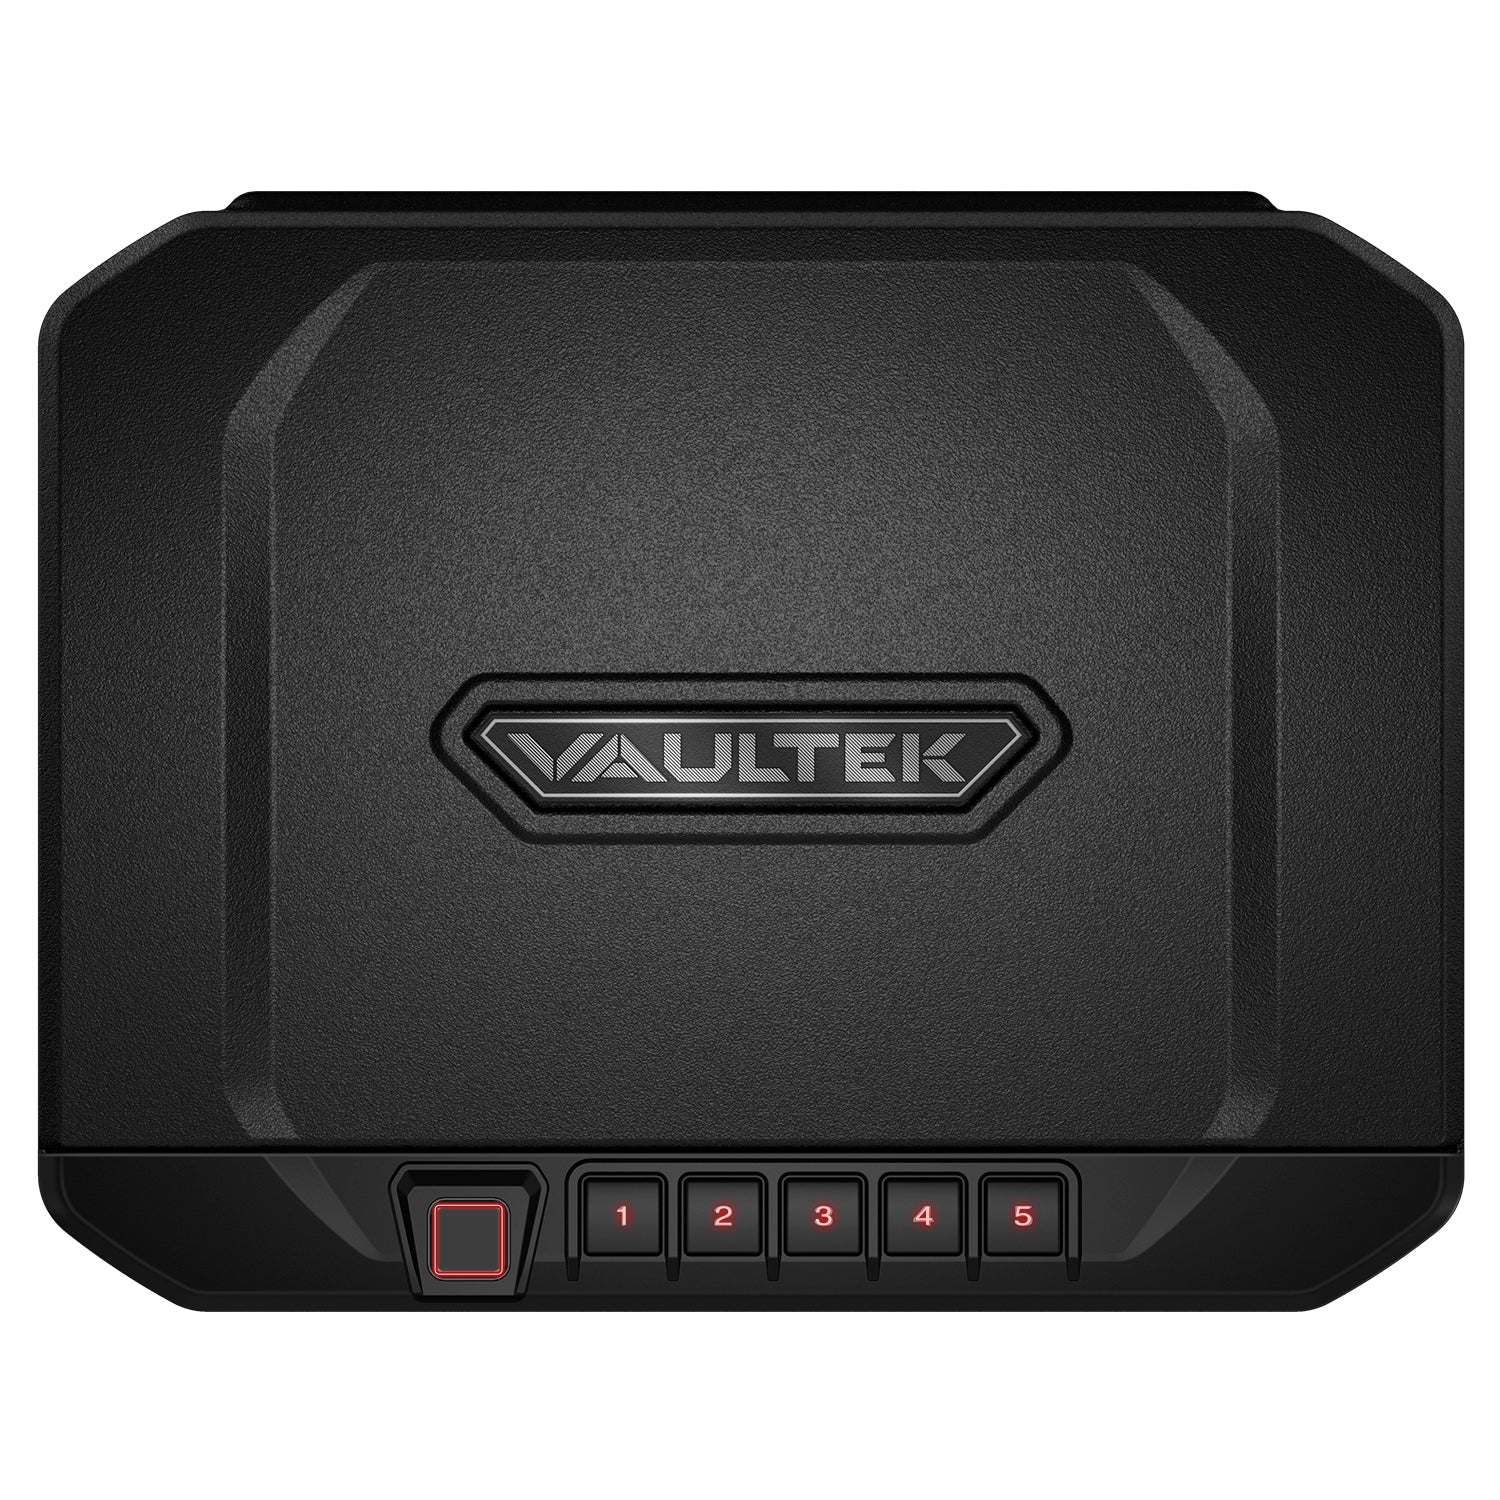 Vaultek - 20 series vs20i compact bluetooth and biometric gun safe - covert black - MODLOCK